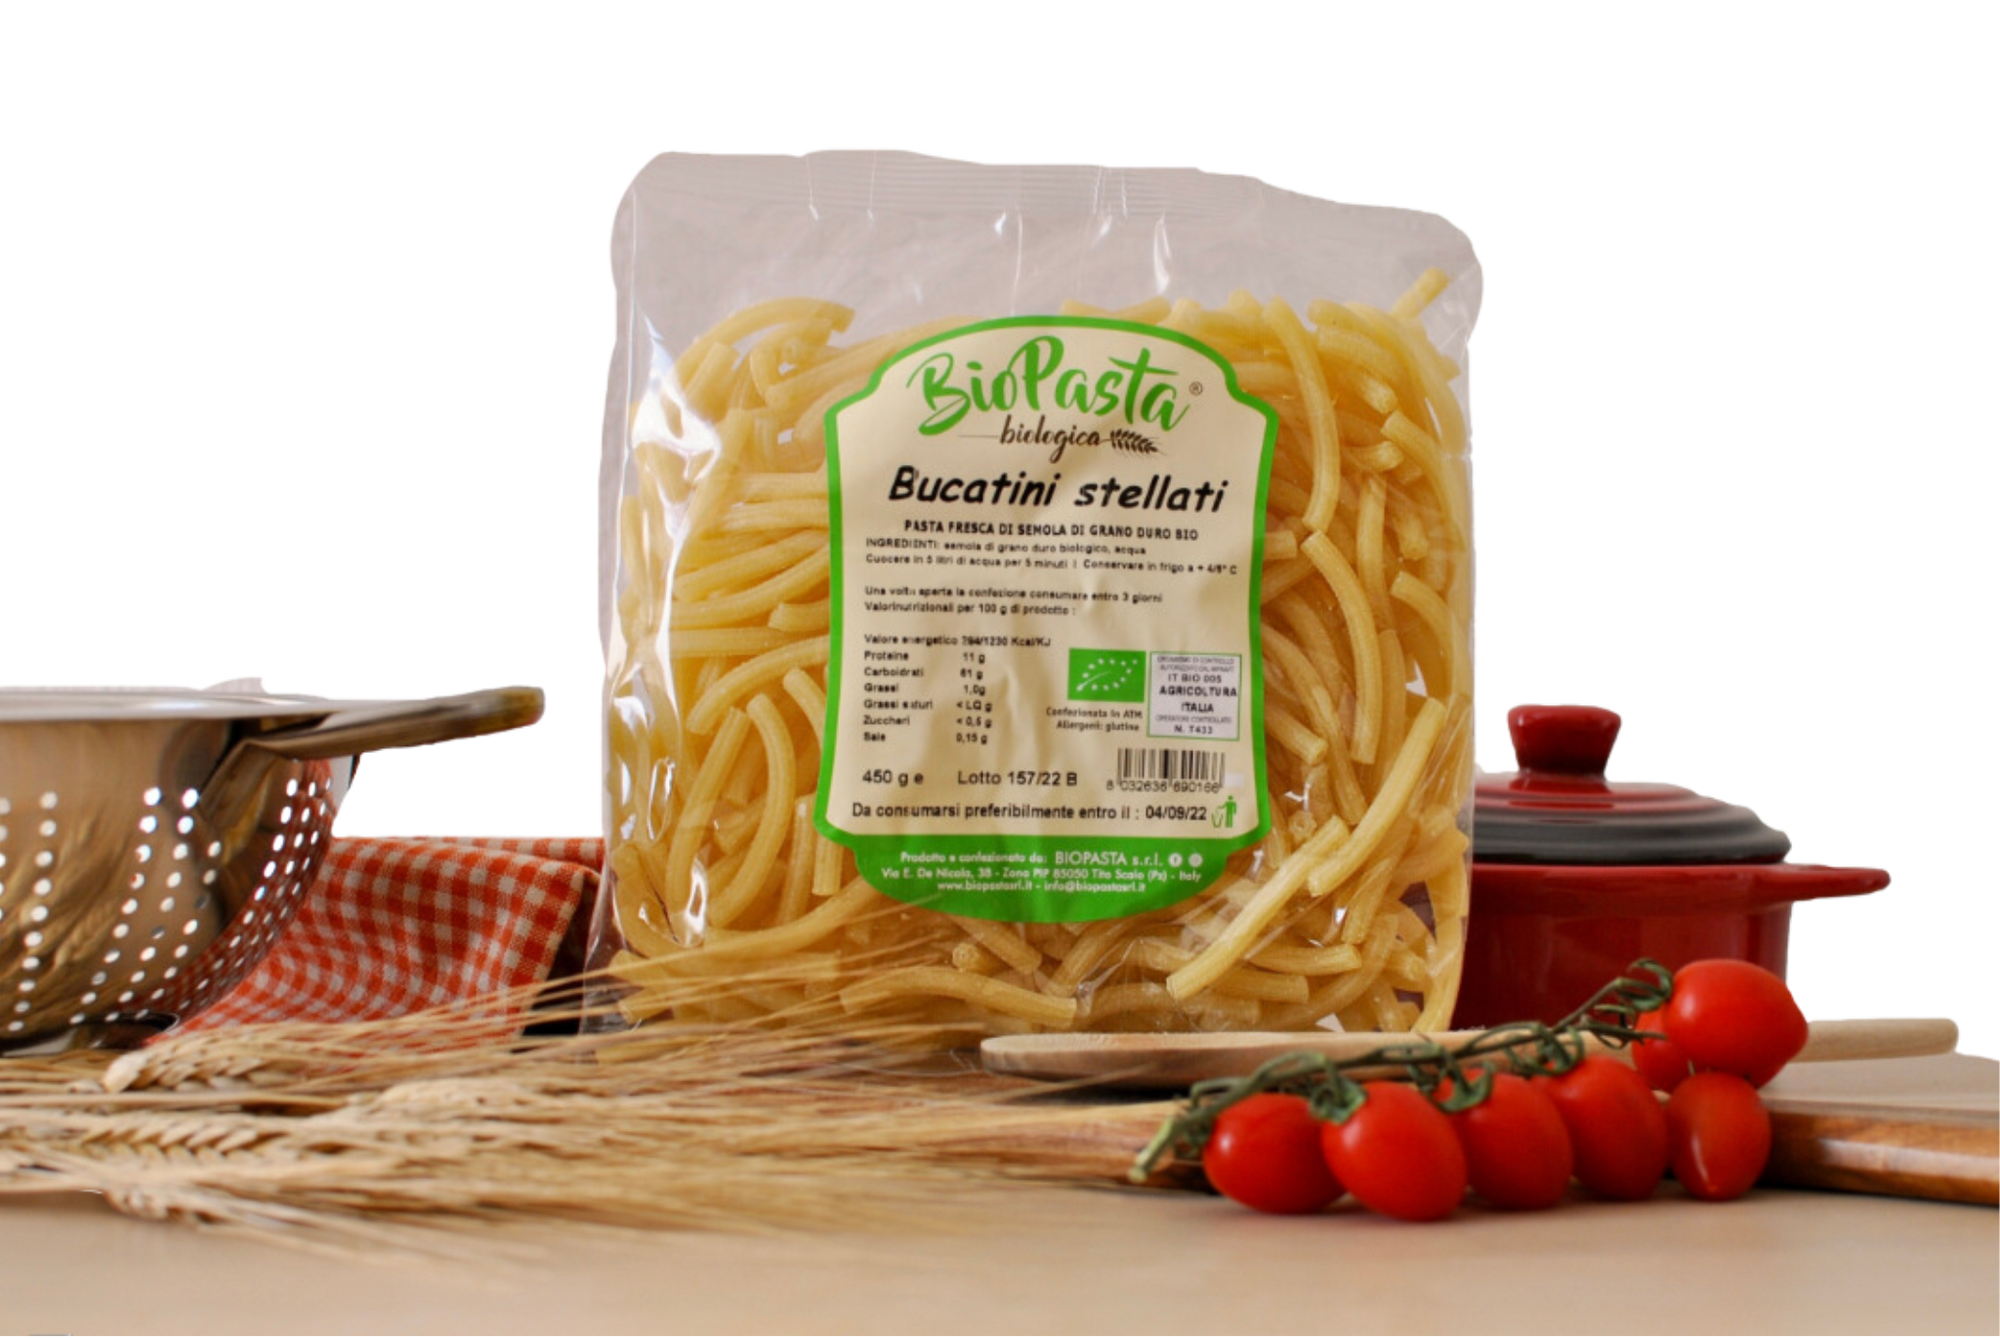 Fresh organic Bucatini Stellati, typical Lucanian artisan pasta